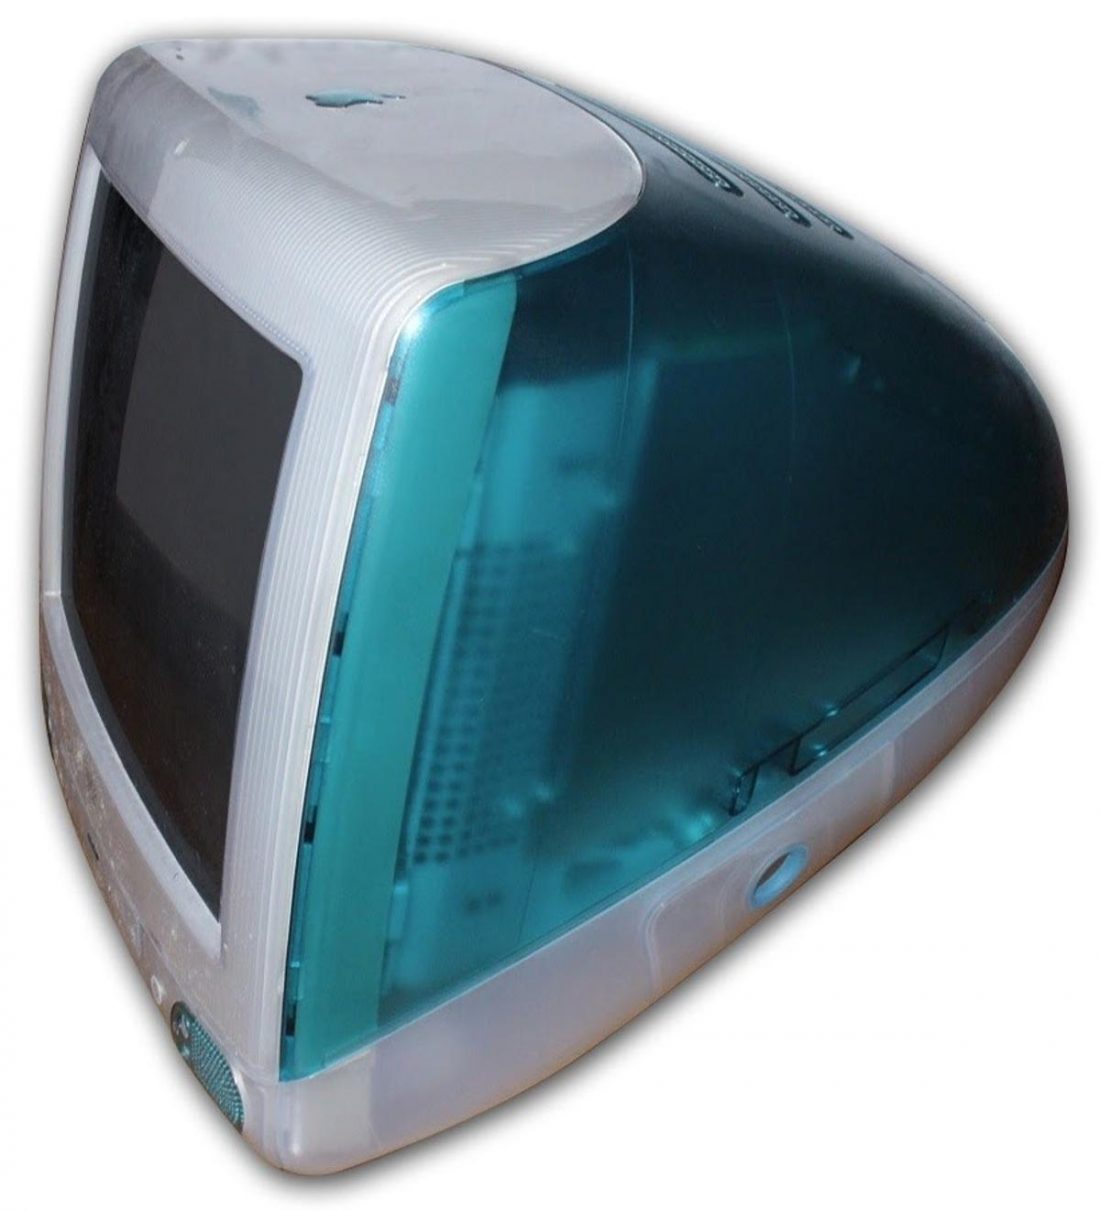 Apple iMac, circa 1998 (From: Wikipedia)